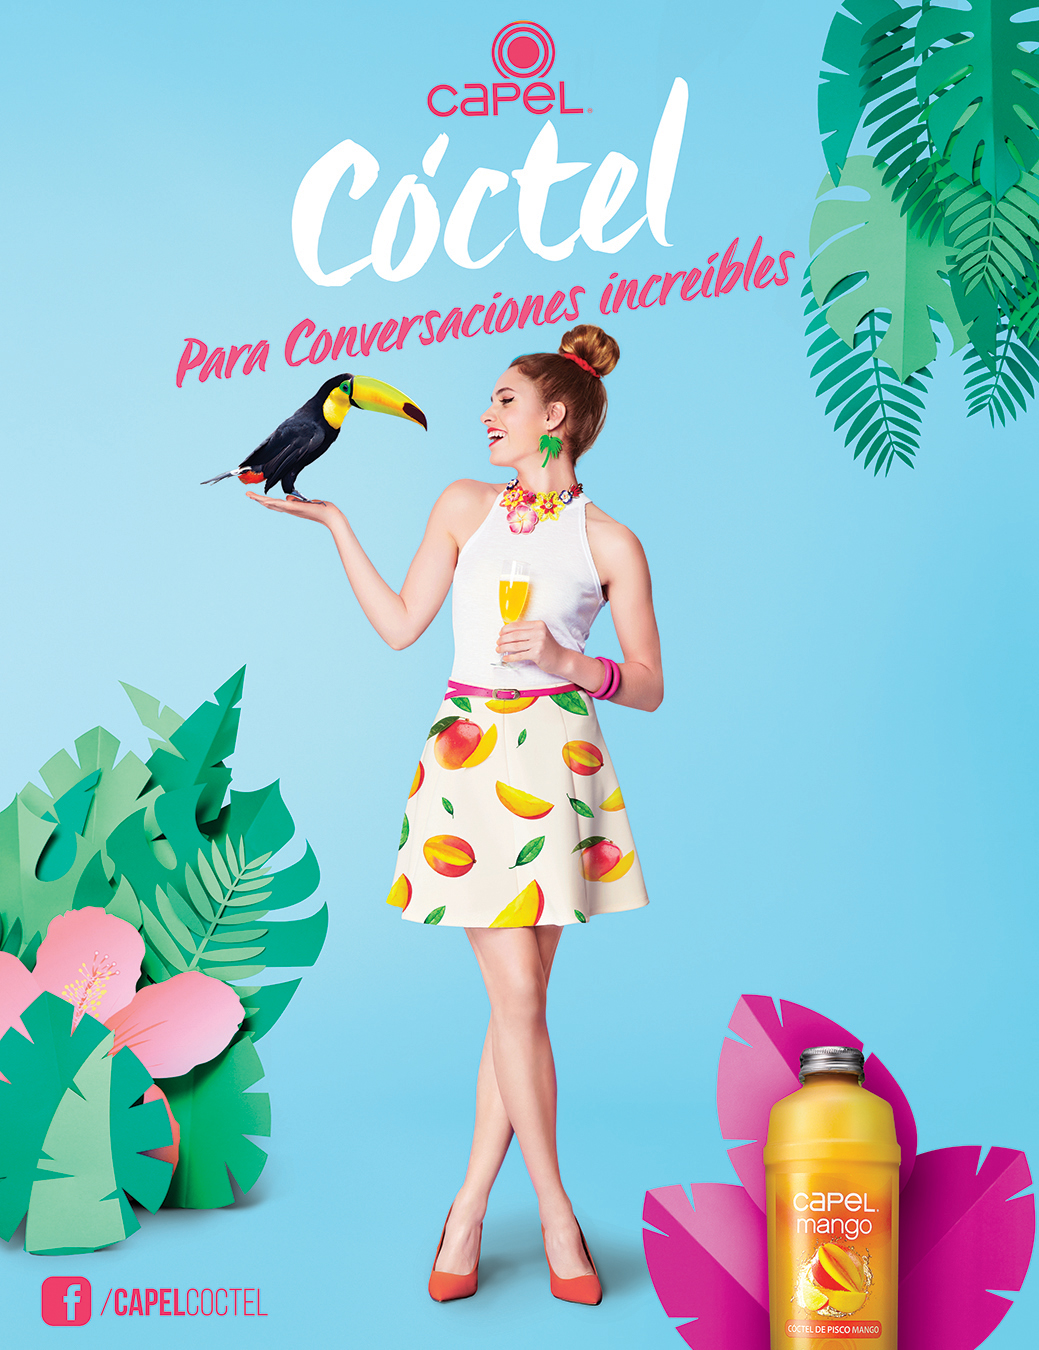 coctel cocktail drink pina colada Mango pisco sour mango sour conversemos Fashion  design